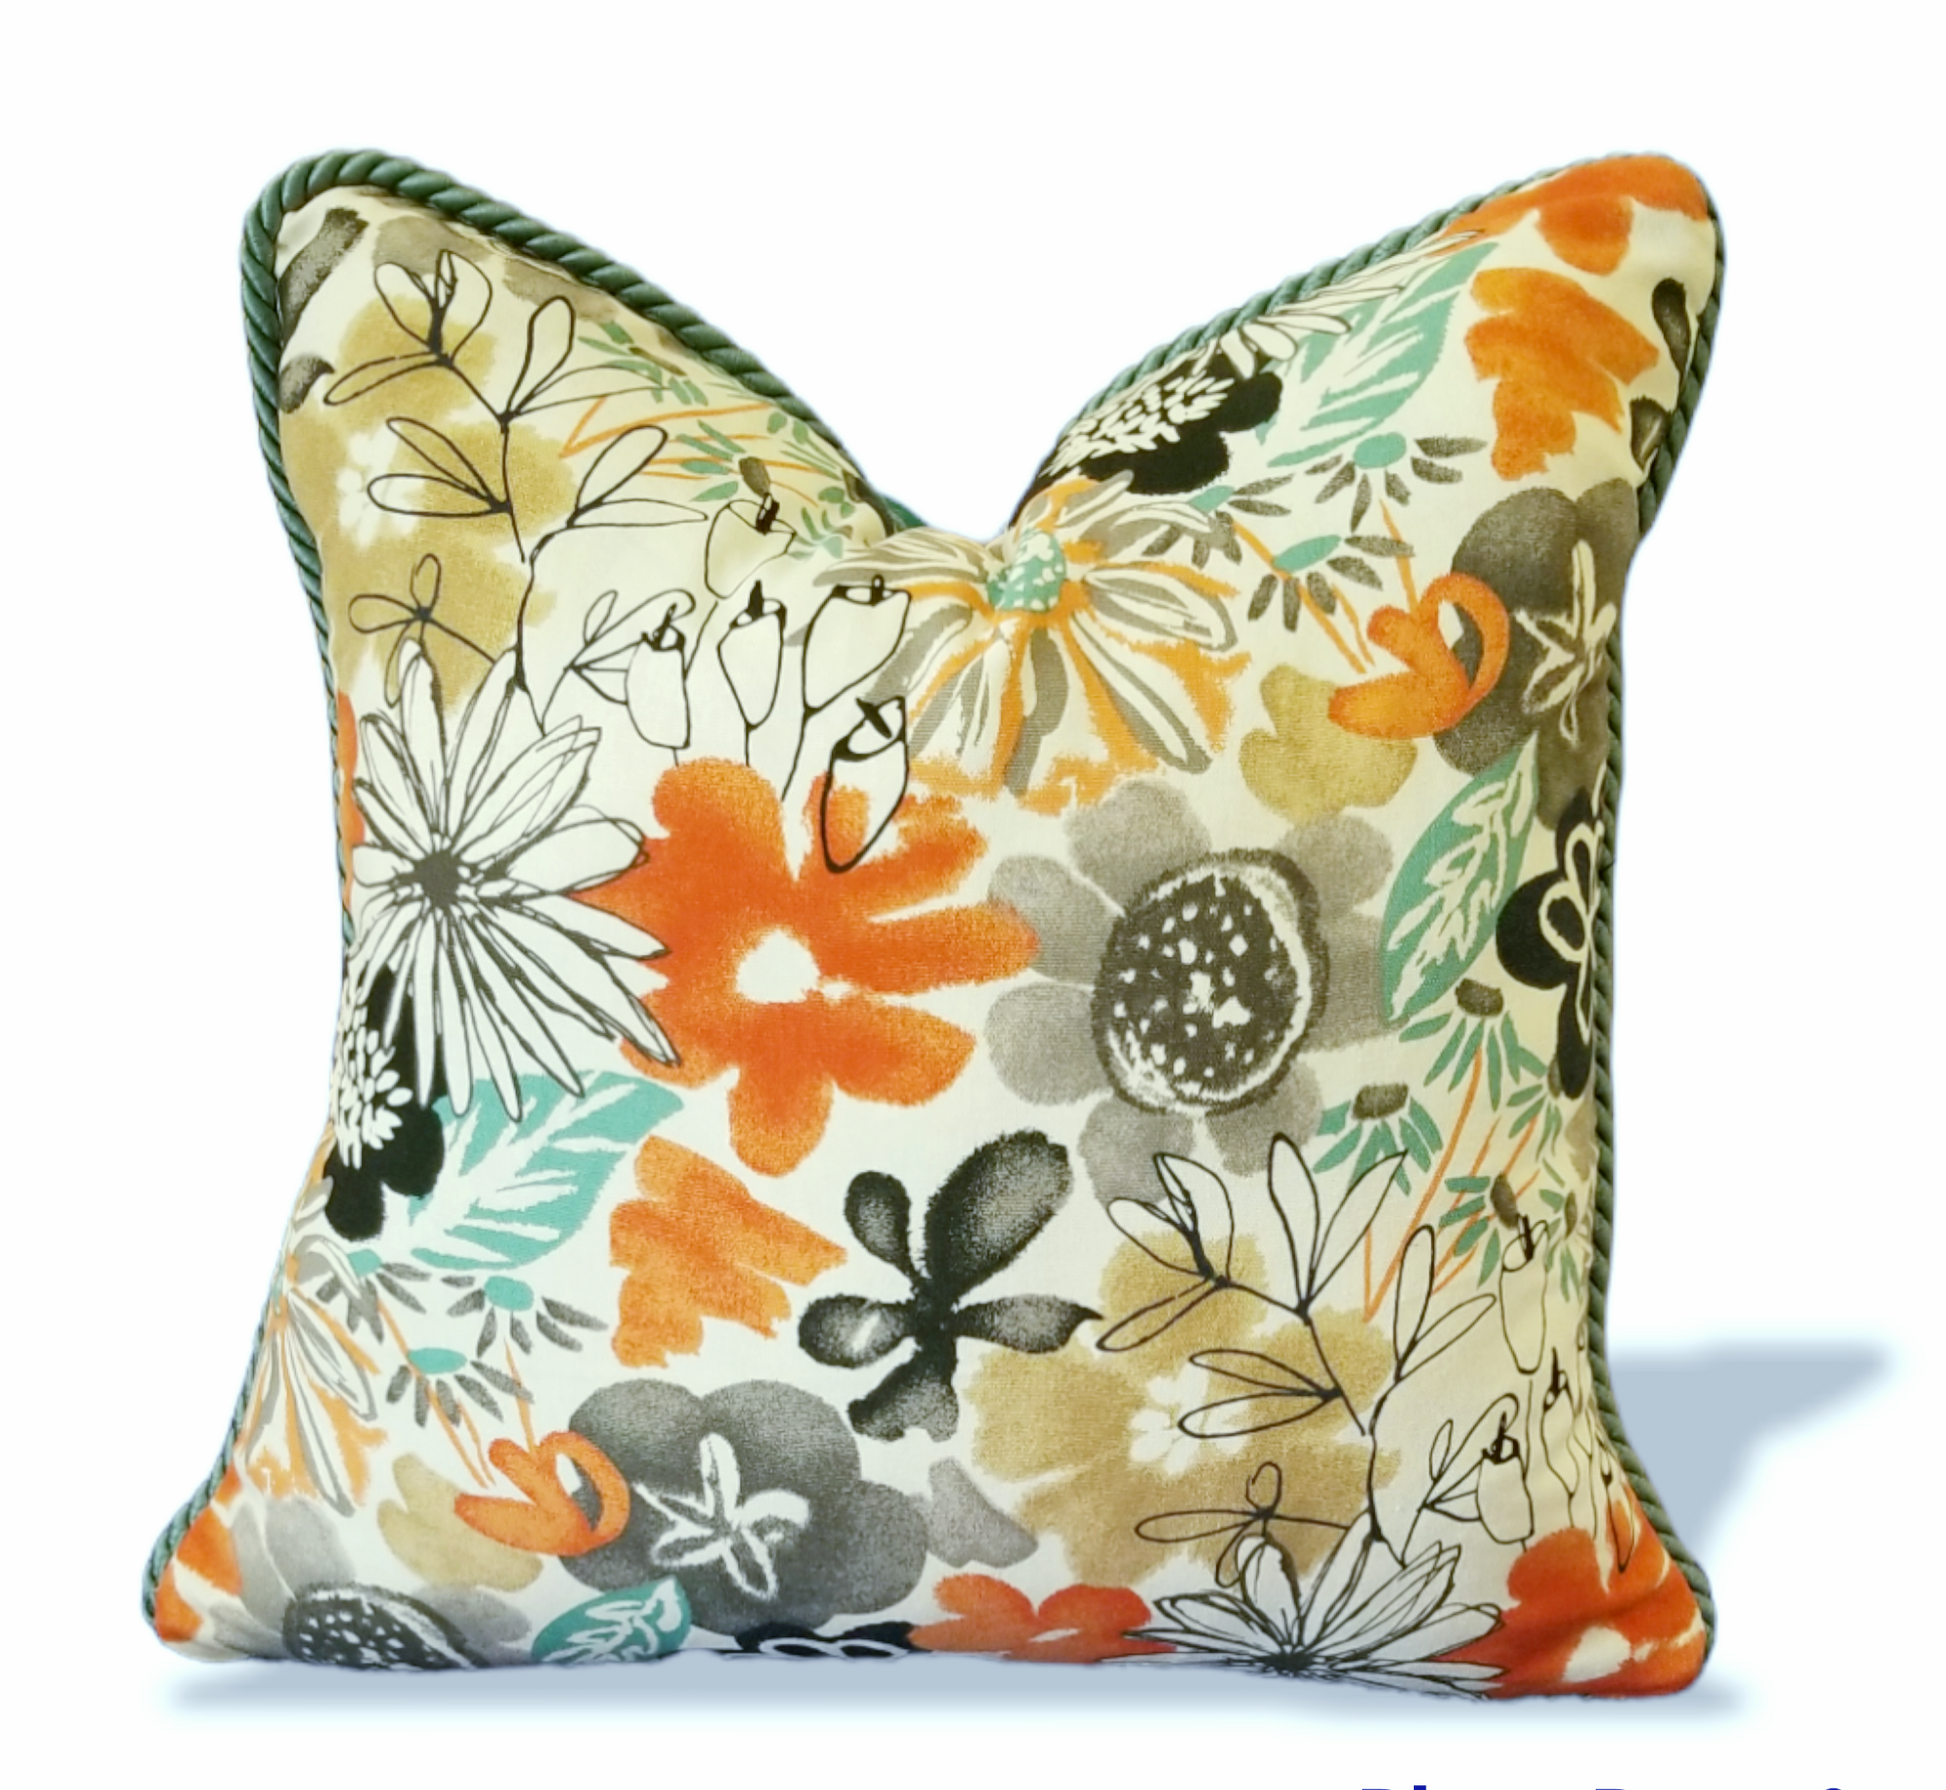 Easy Spring luxury Decorative Pillow.